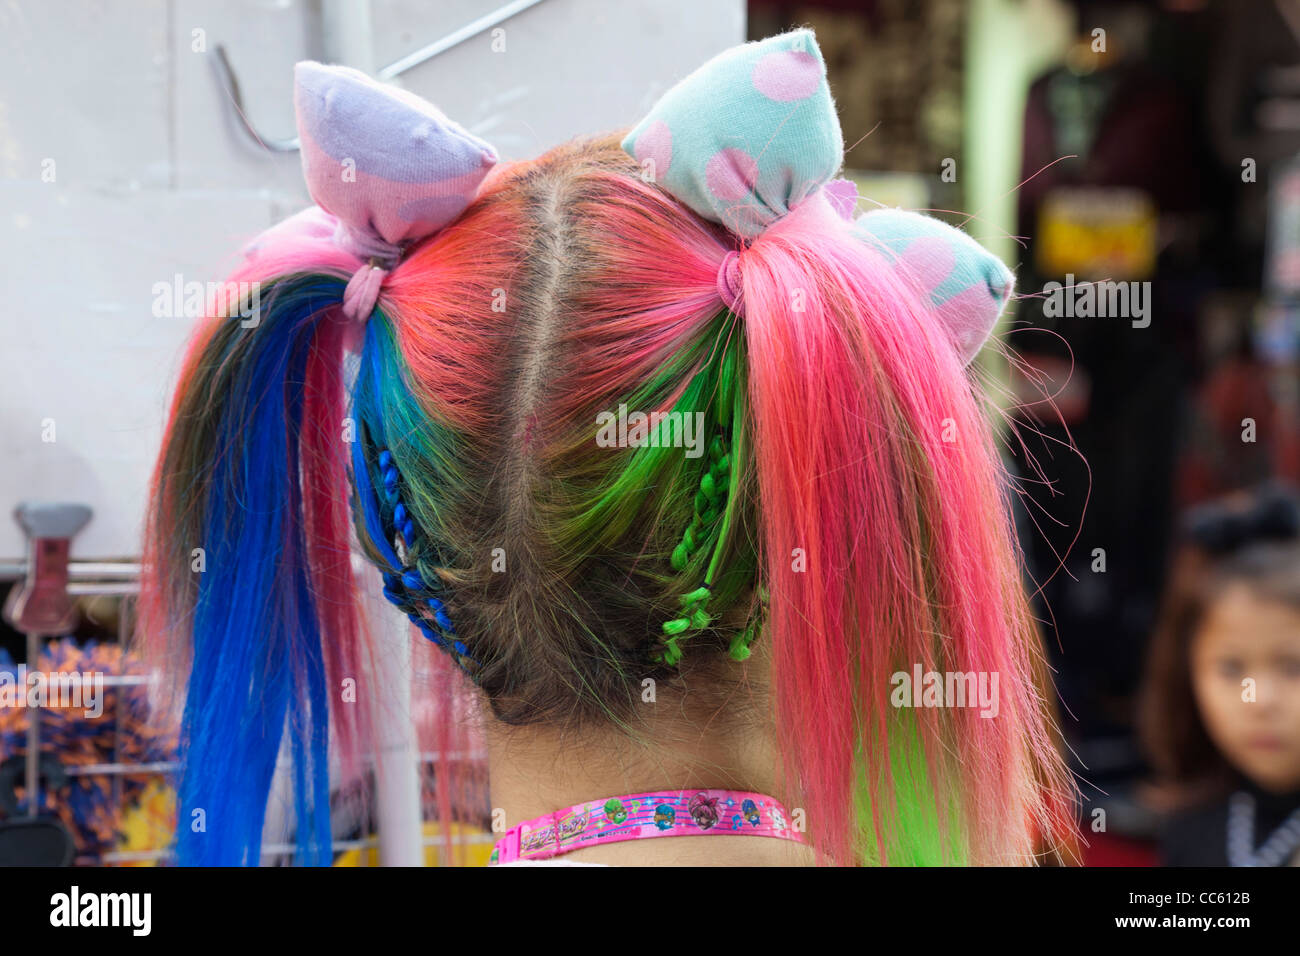 Japan, Tokyo, Harajuku, Takeshita Dori, Teenage Girl's Colourful Hairstyle Stock Photo